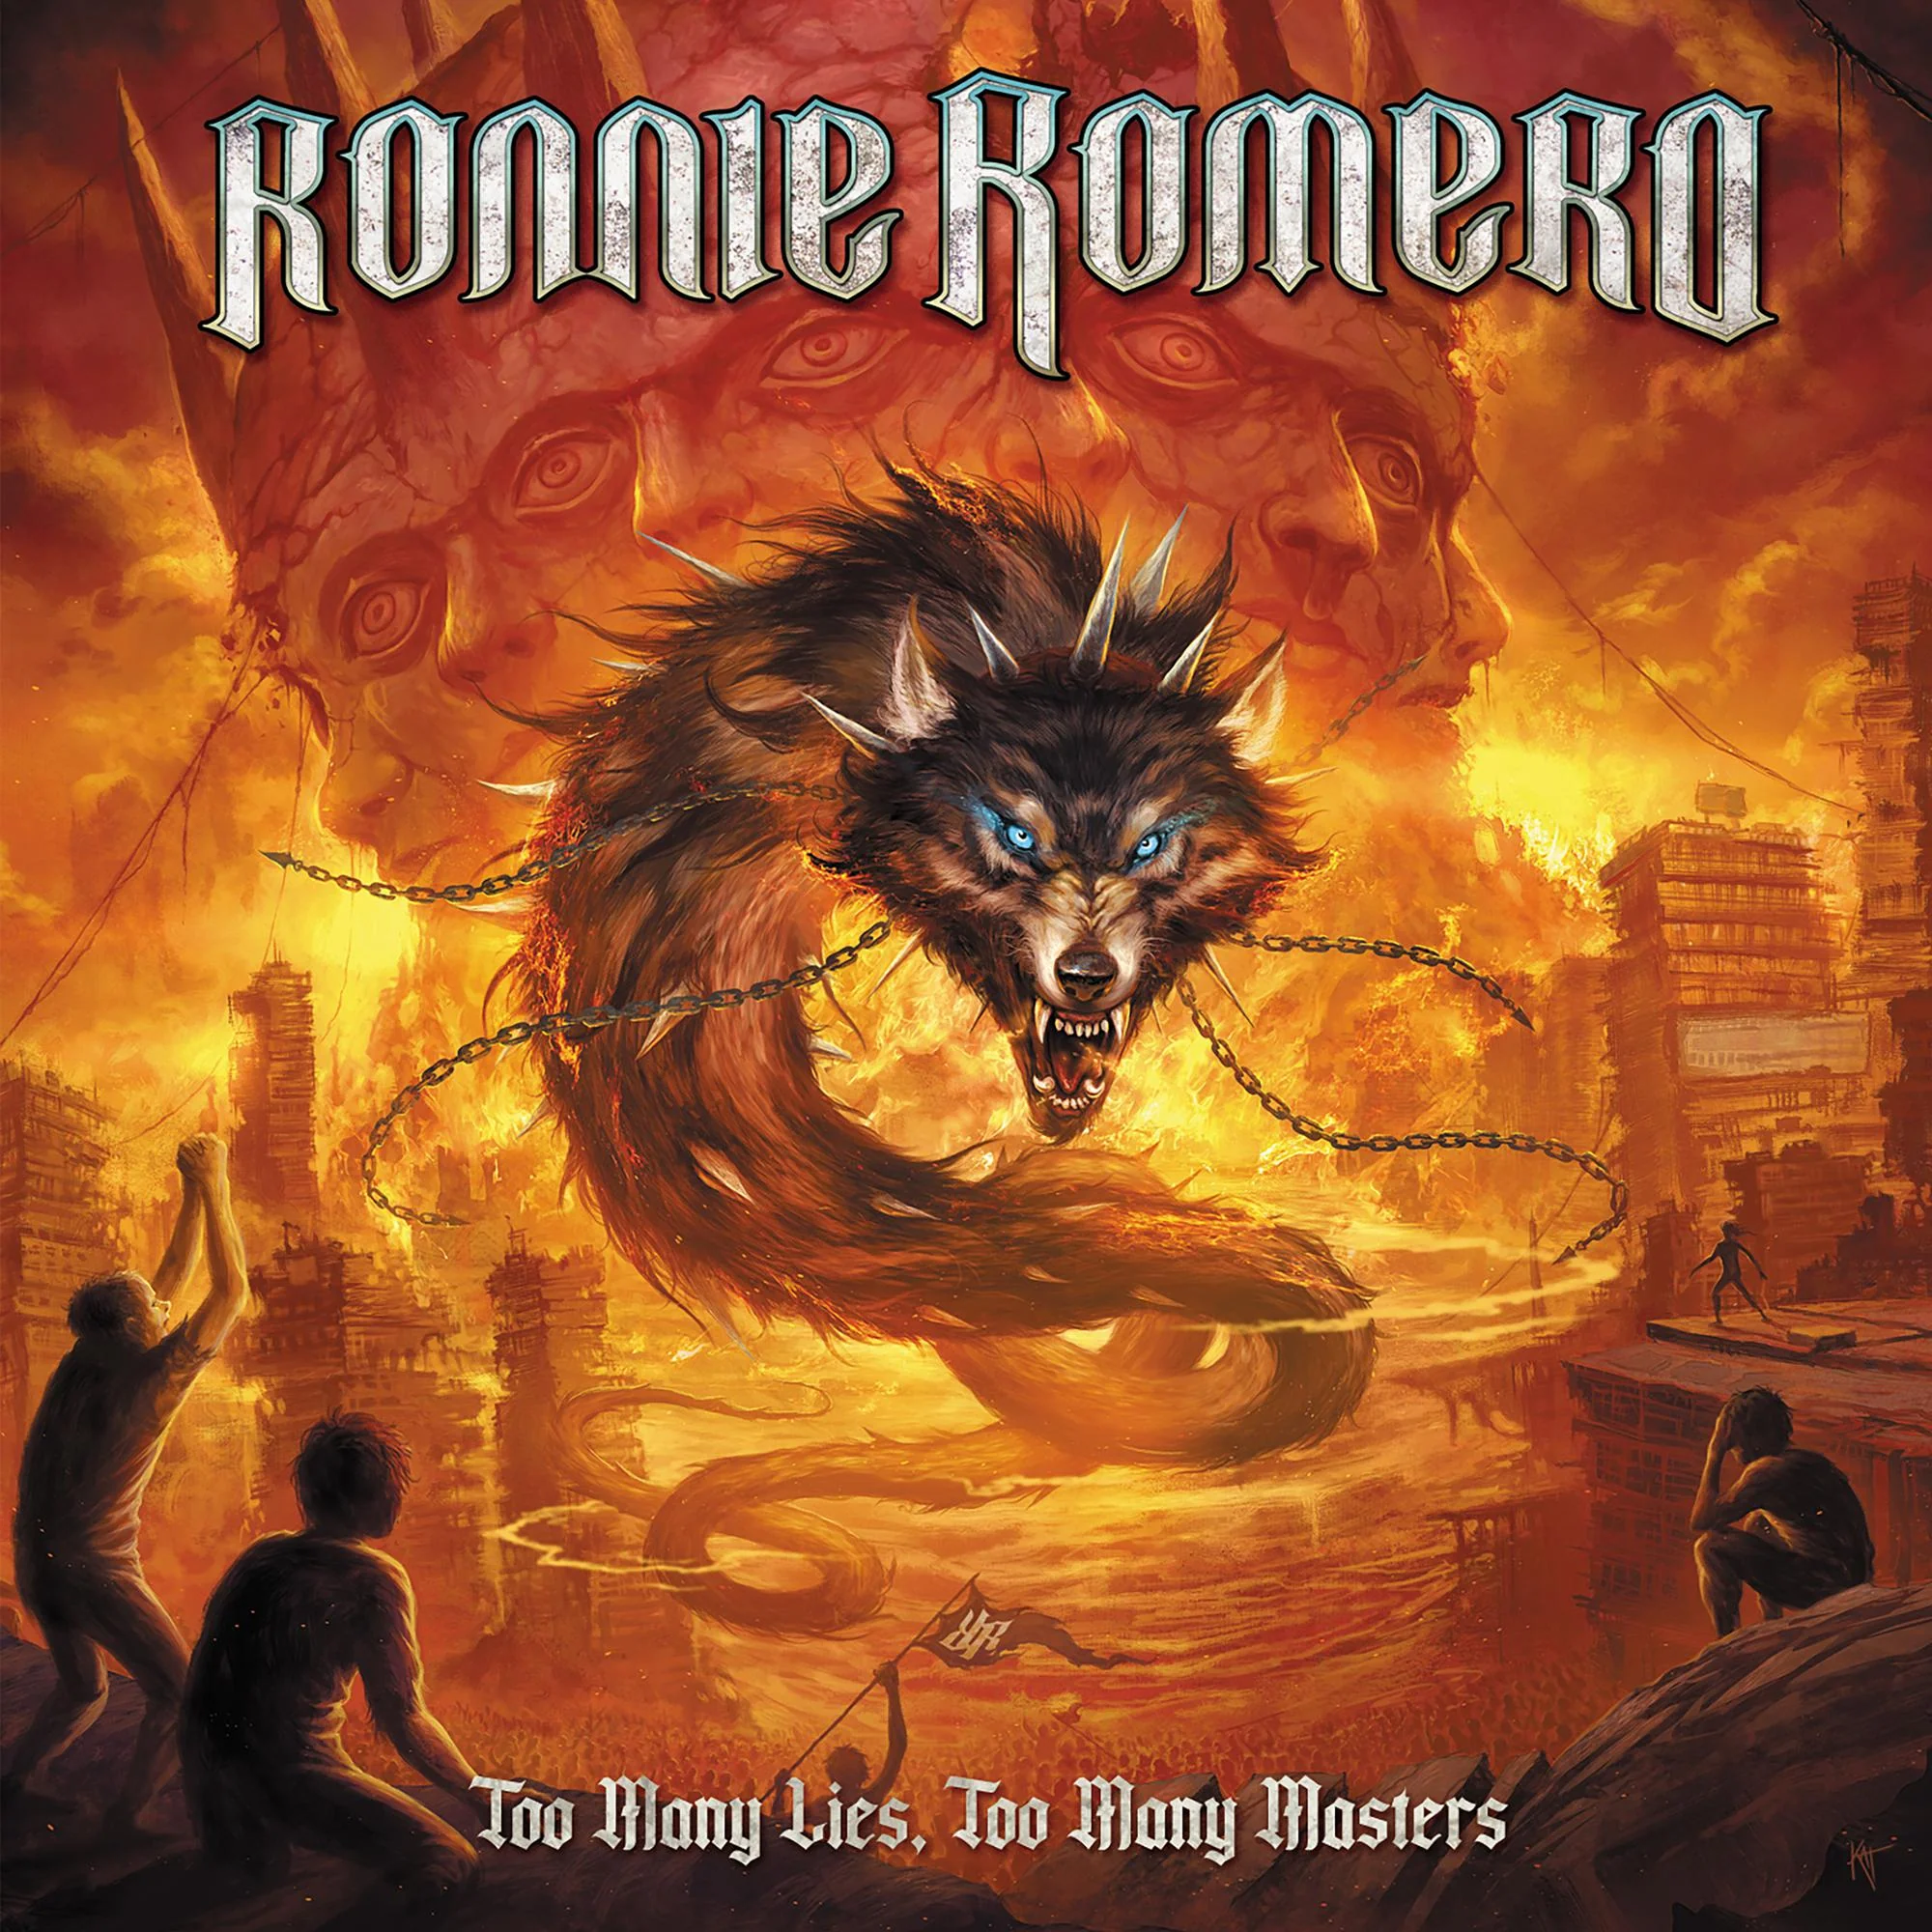 RONNIE ROMERO BUNDLE SIGNED VINYL + CD + SHIRT